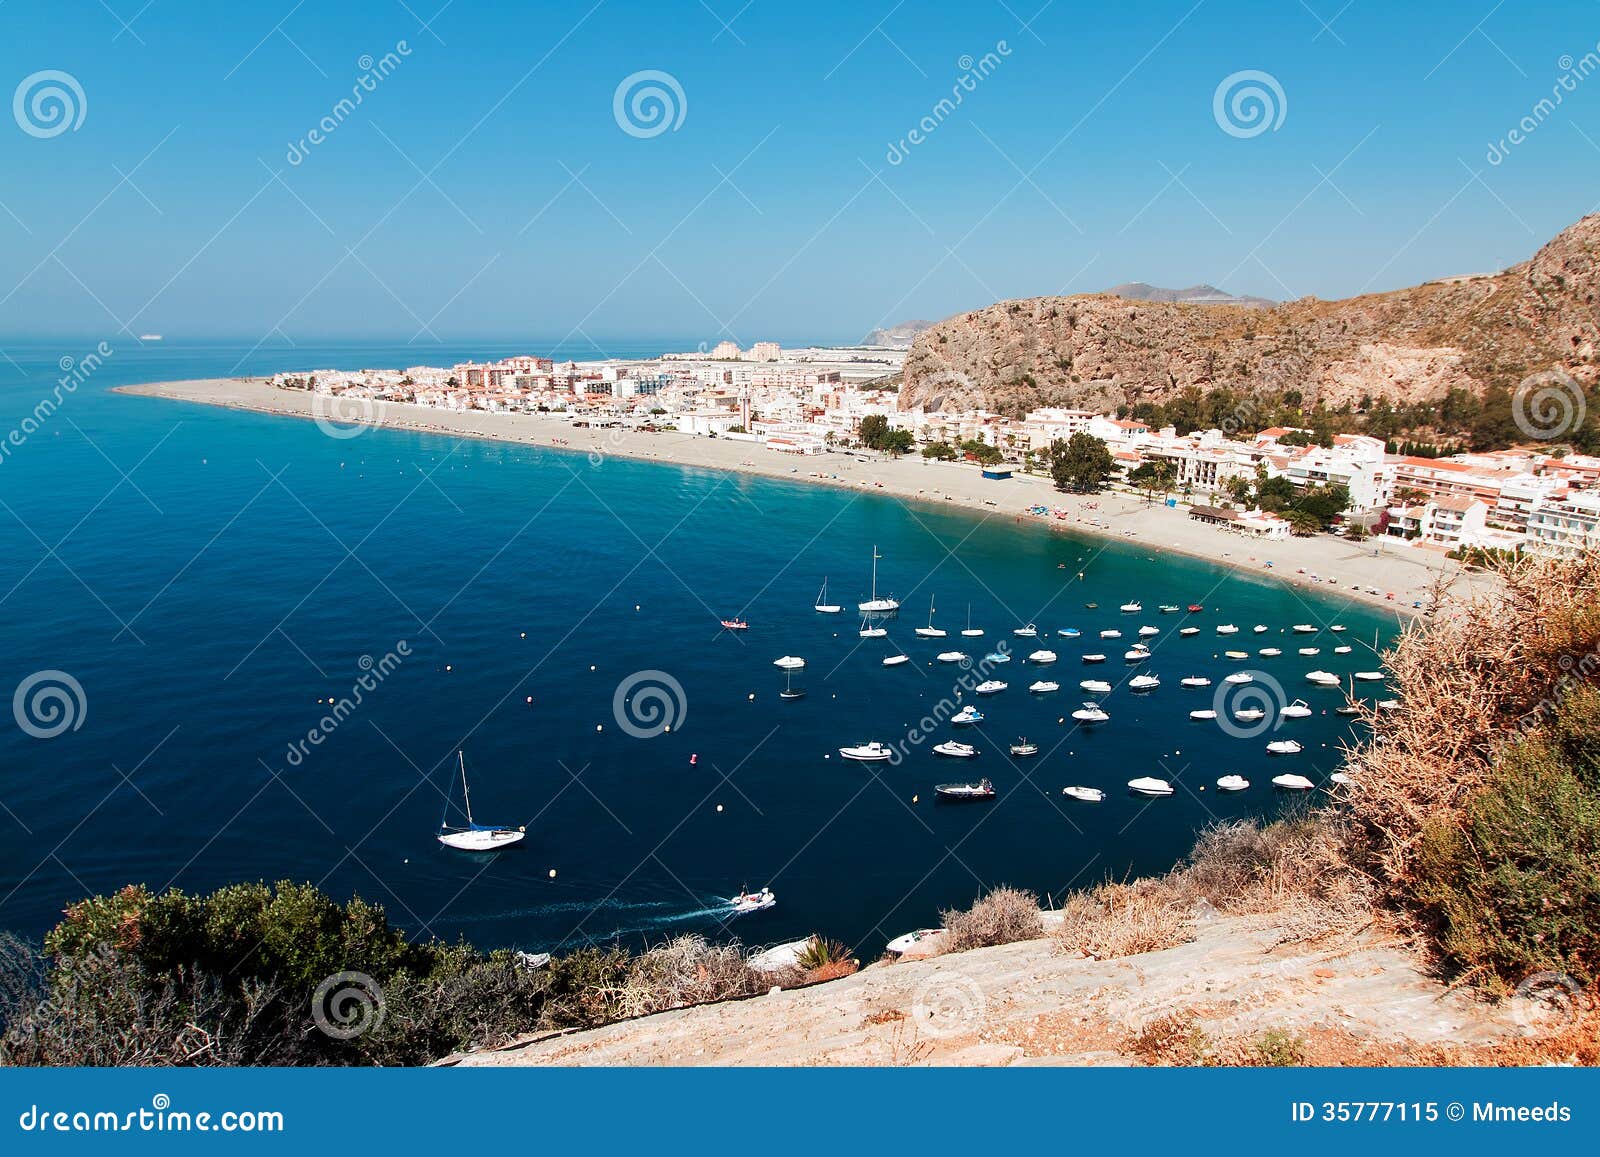 mediterranean coast, city of calahonda, province of almeria, spa